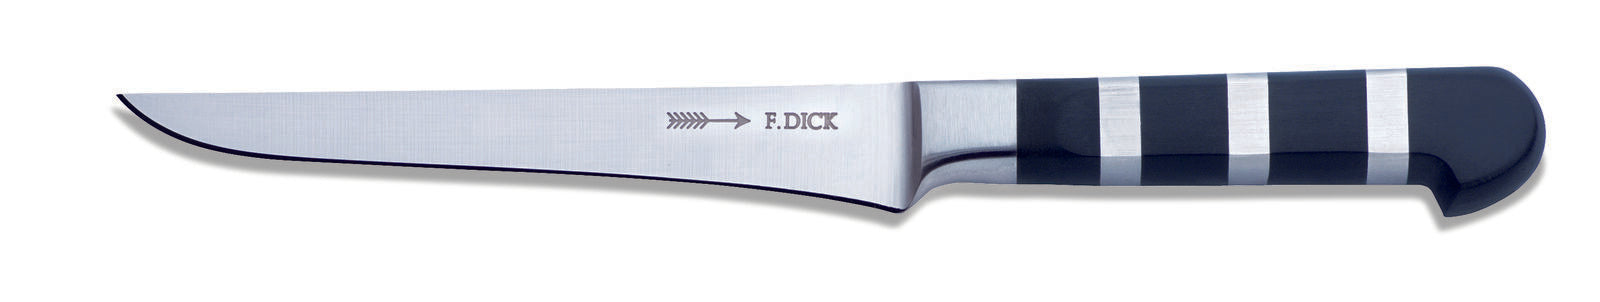 F. Dick (8194515) 6" Boning Knife - 1905 Series-cityfoodequipment.com